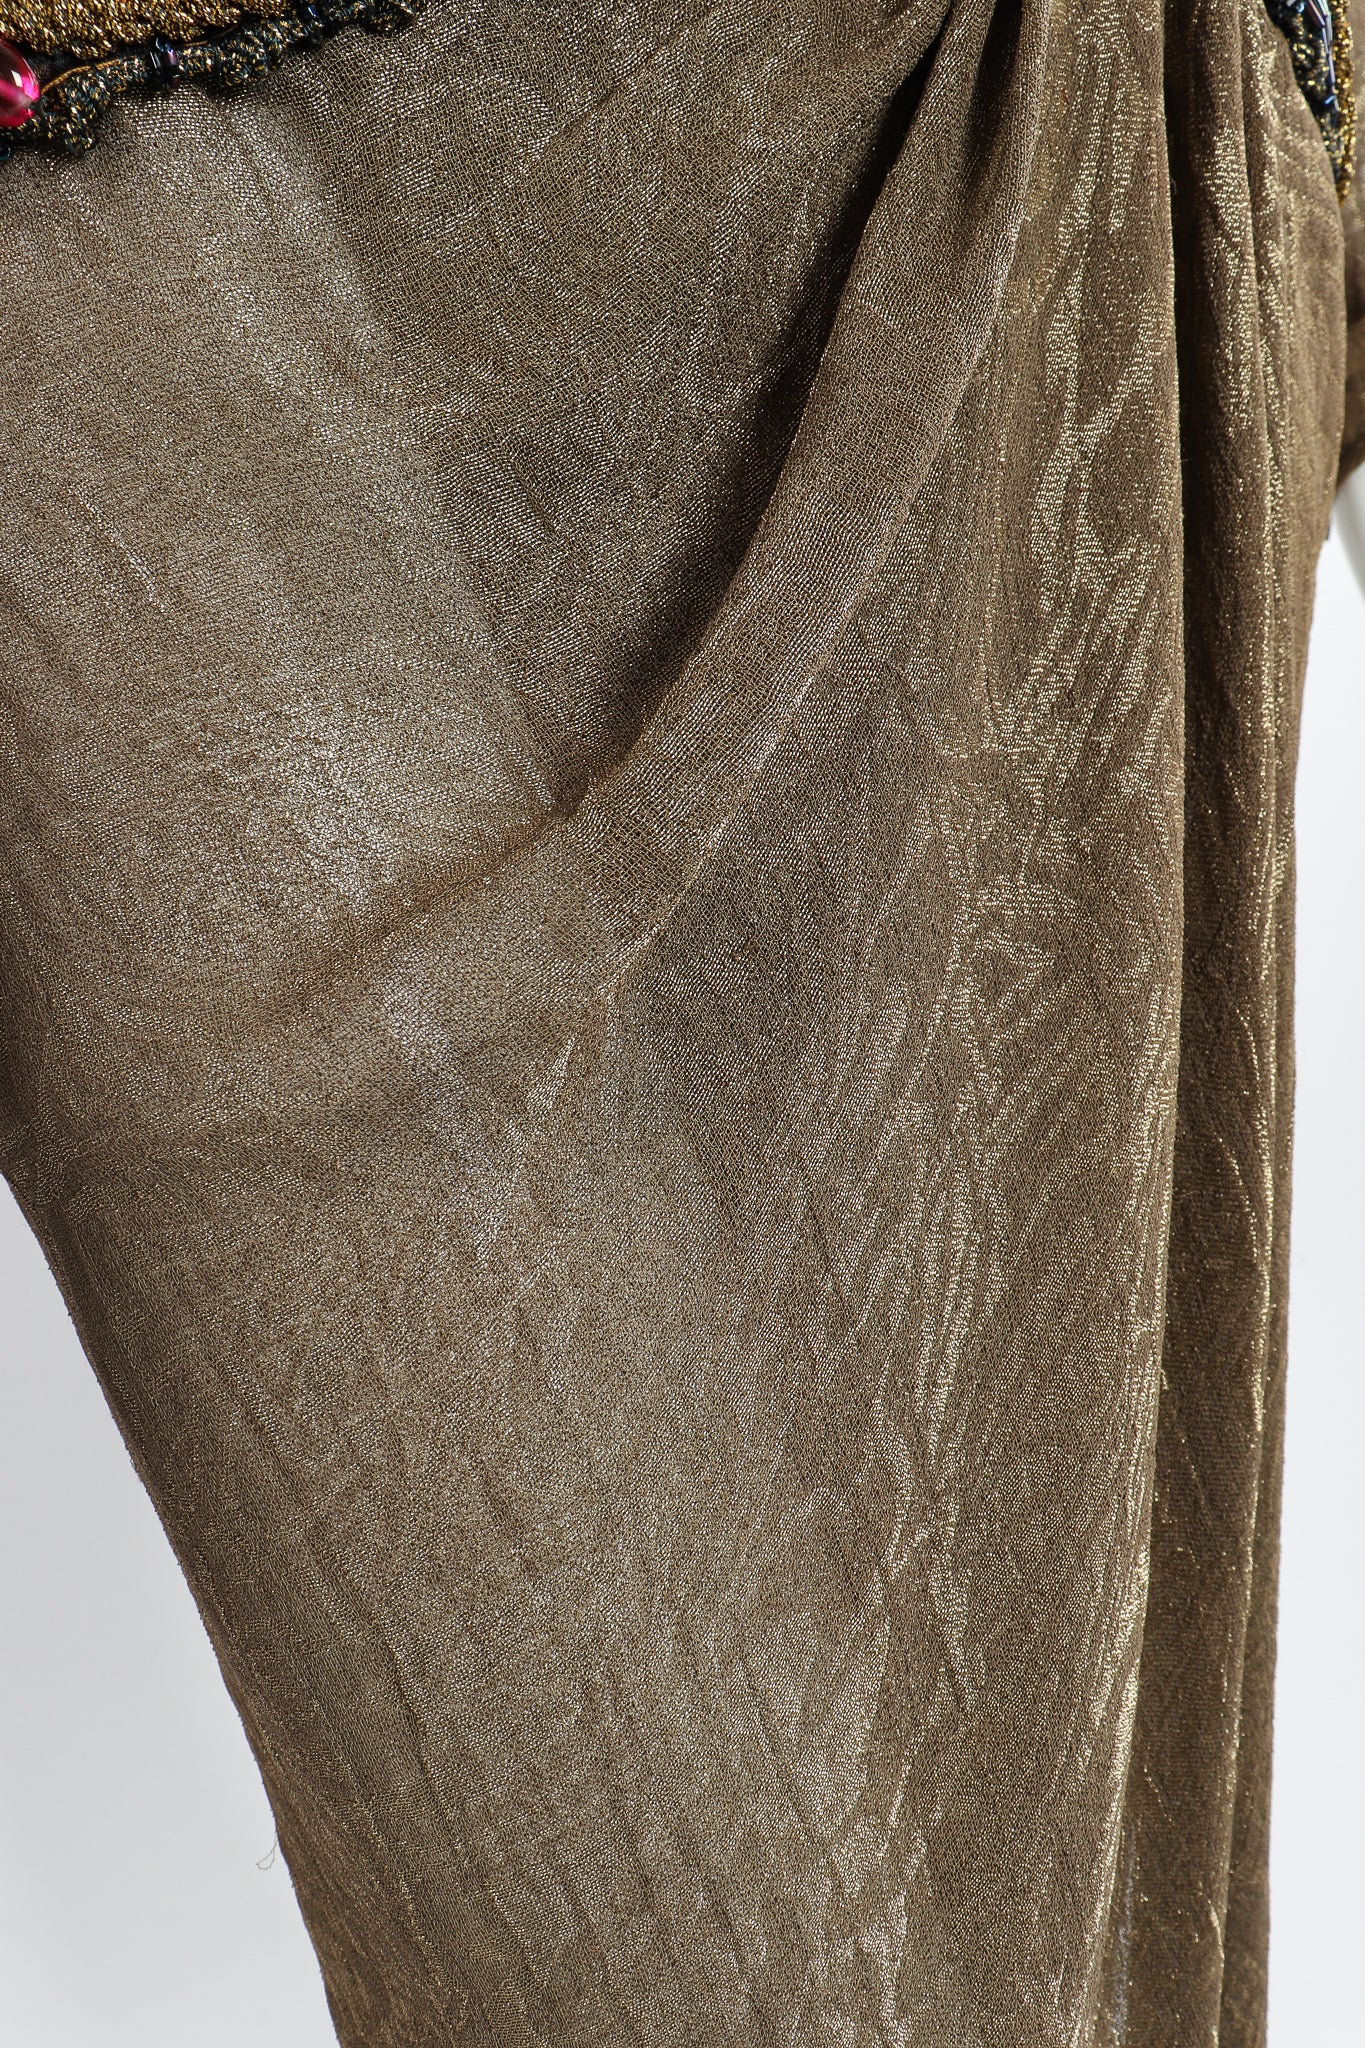 Vintage Oscar de la Renta Jeweled Lamé Wrap Skirt Set fabric detail at Recess Los Angeles